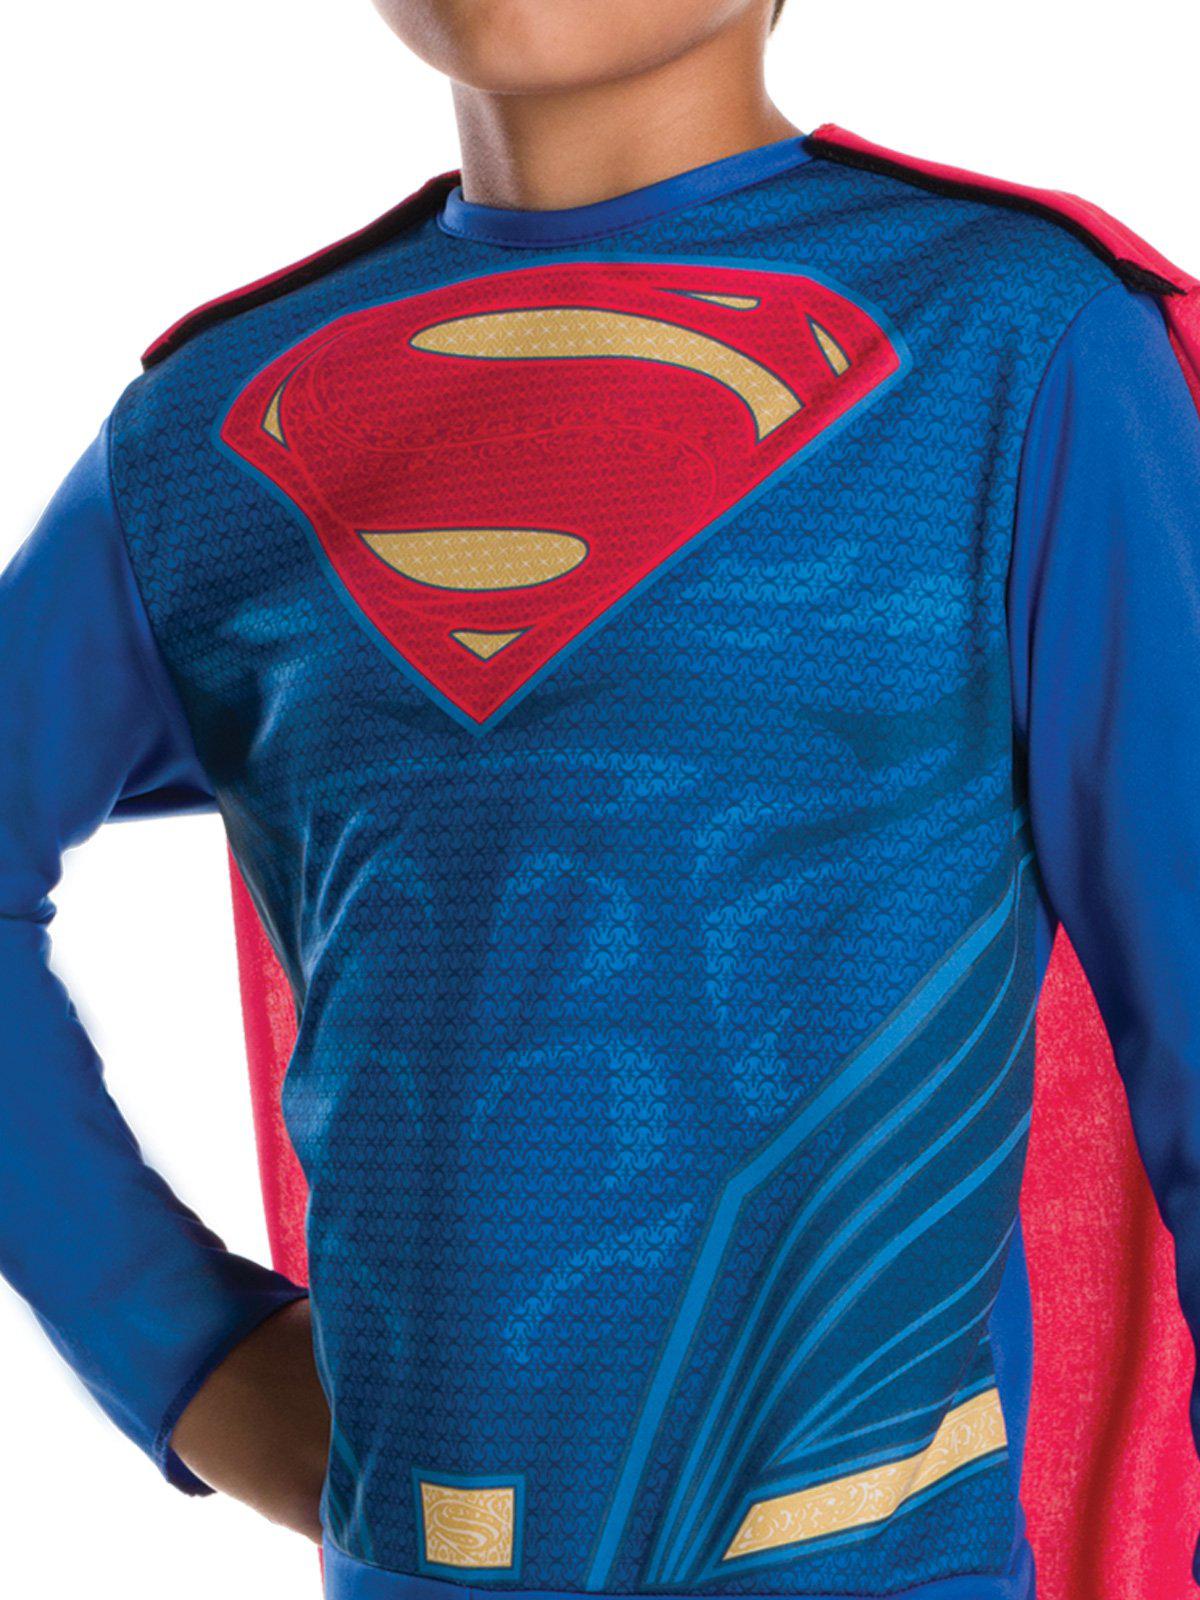 Superman Costume Kids